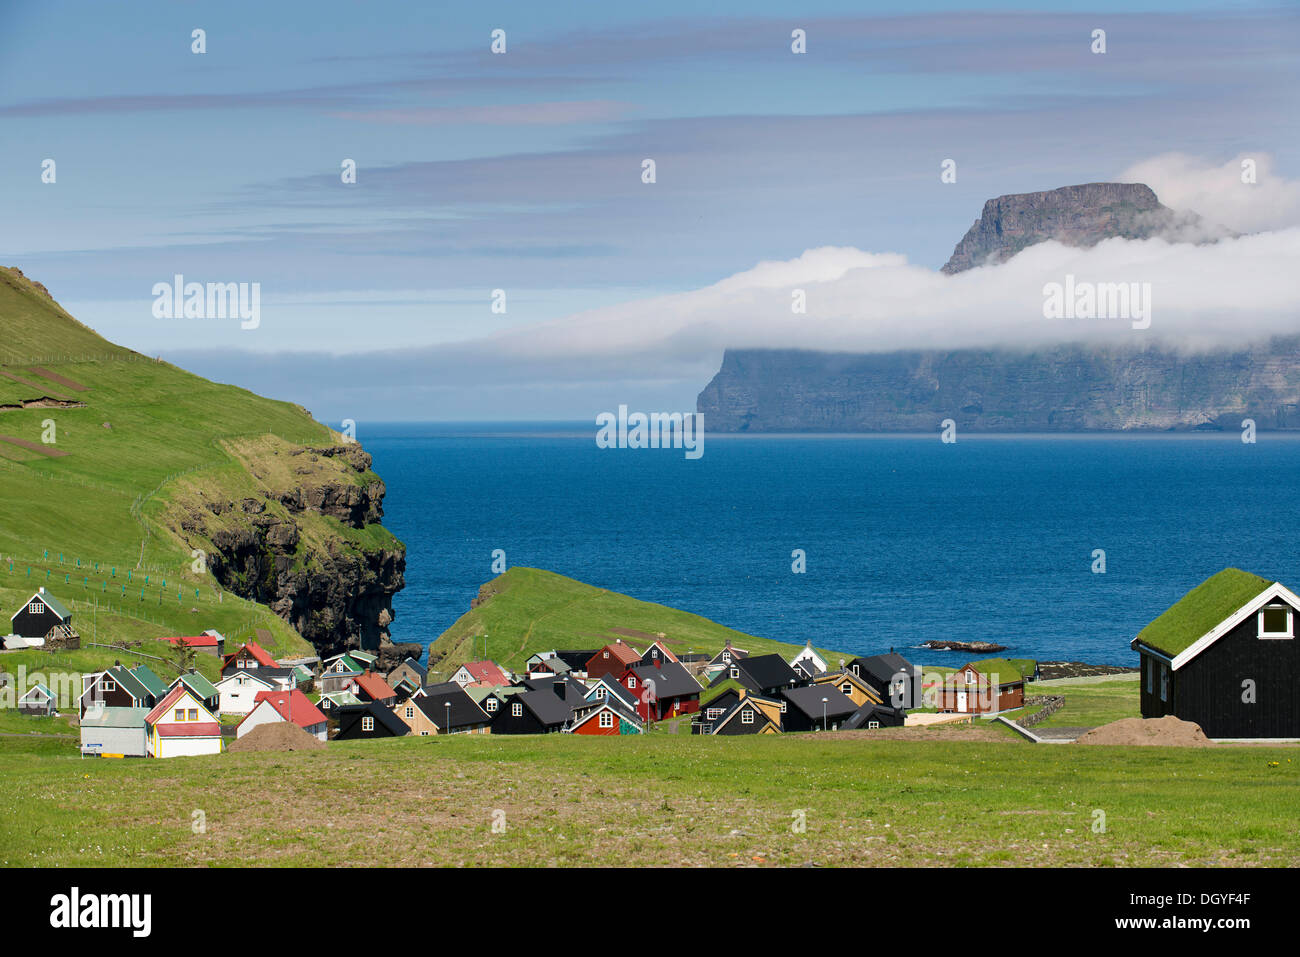 Village with typical colourful houses, Kalsoy island at back, Gjogv, Eysturoy, Faroe Islands, Denmark Stock Photo